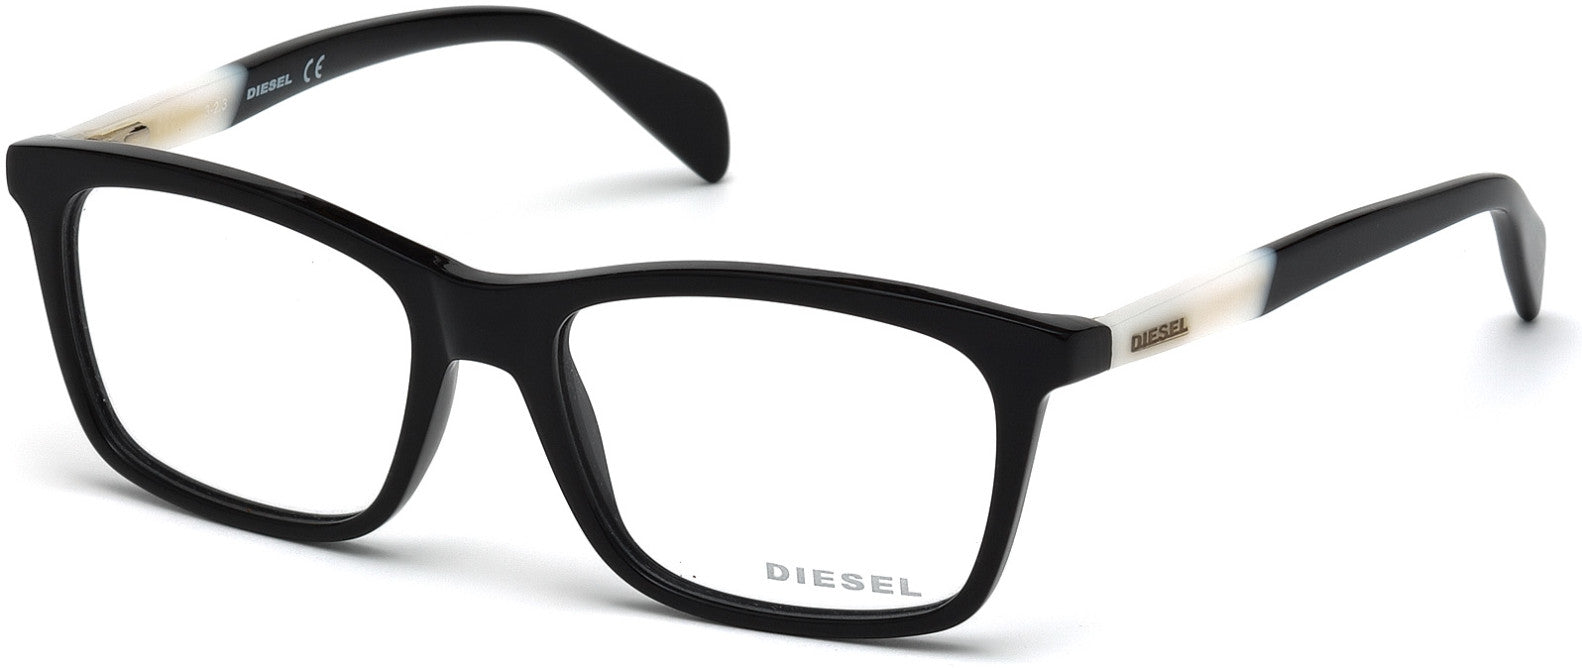 Diesel DL5089 Geometric Eyeglasses 001-001 - Shiny Black